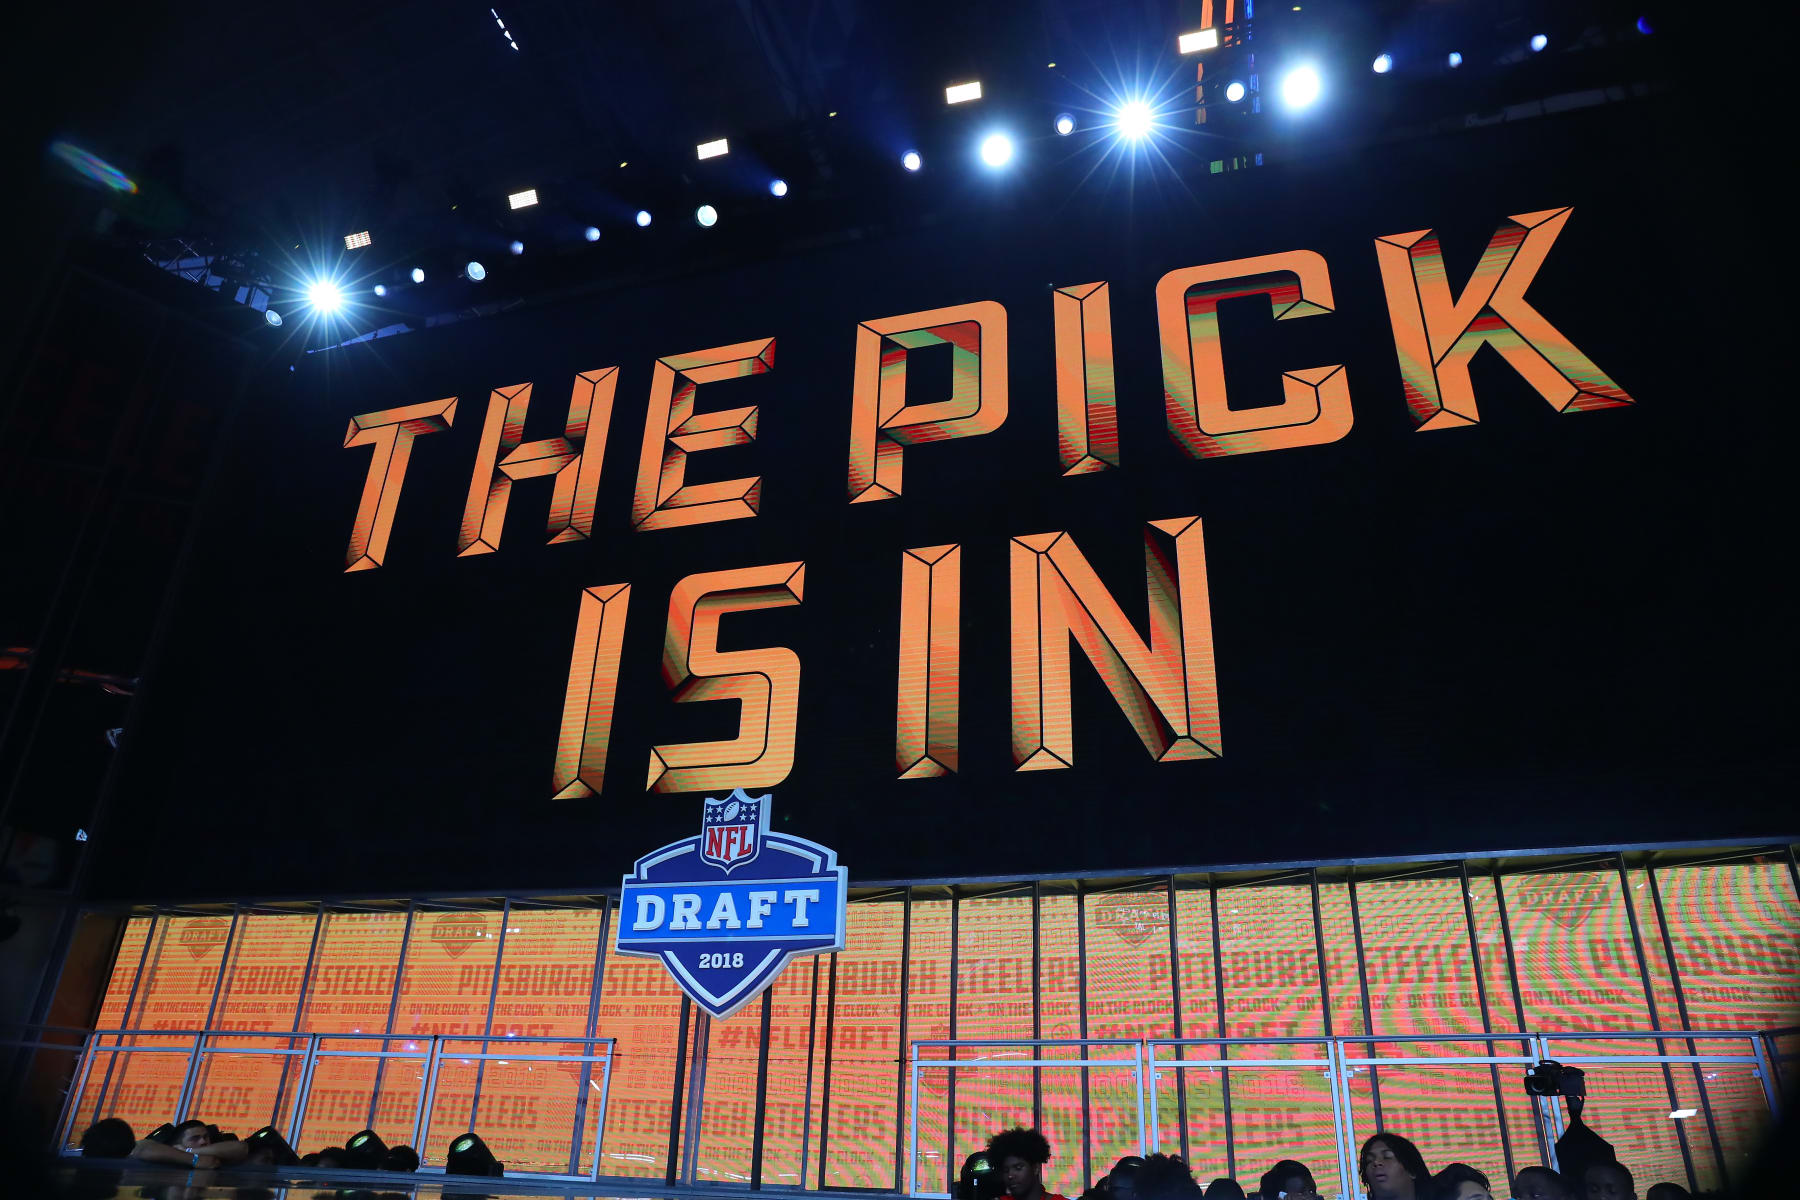 A recap of the Steelers' 2018 draft class